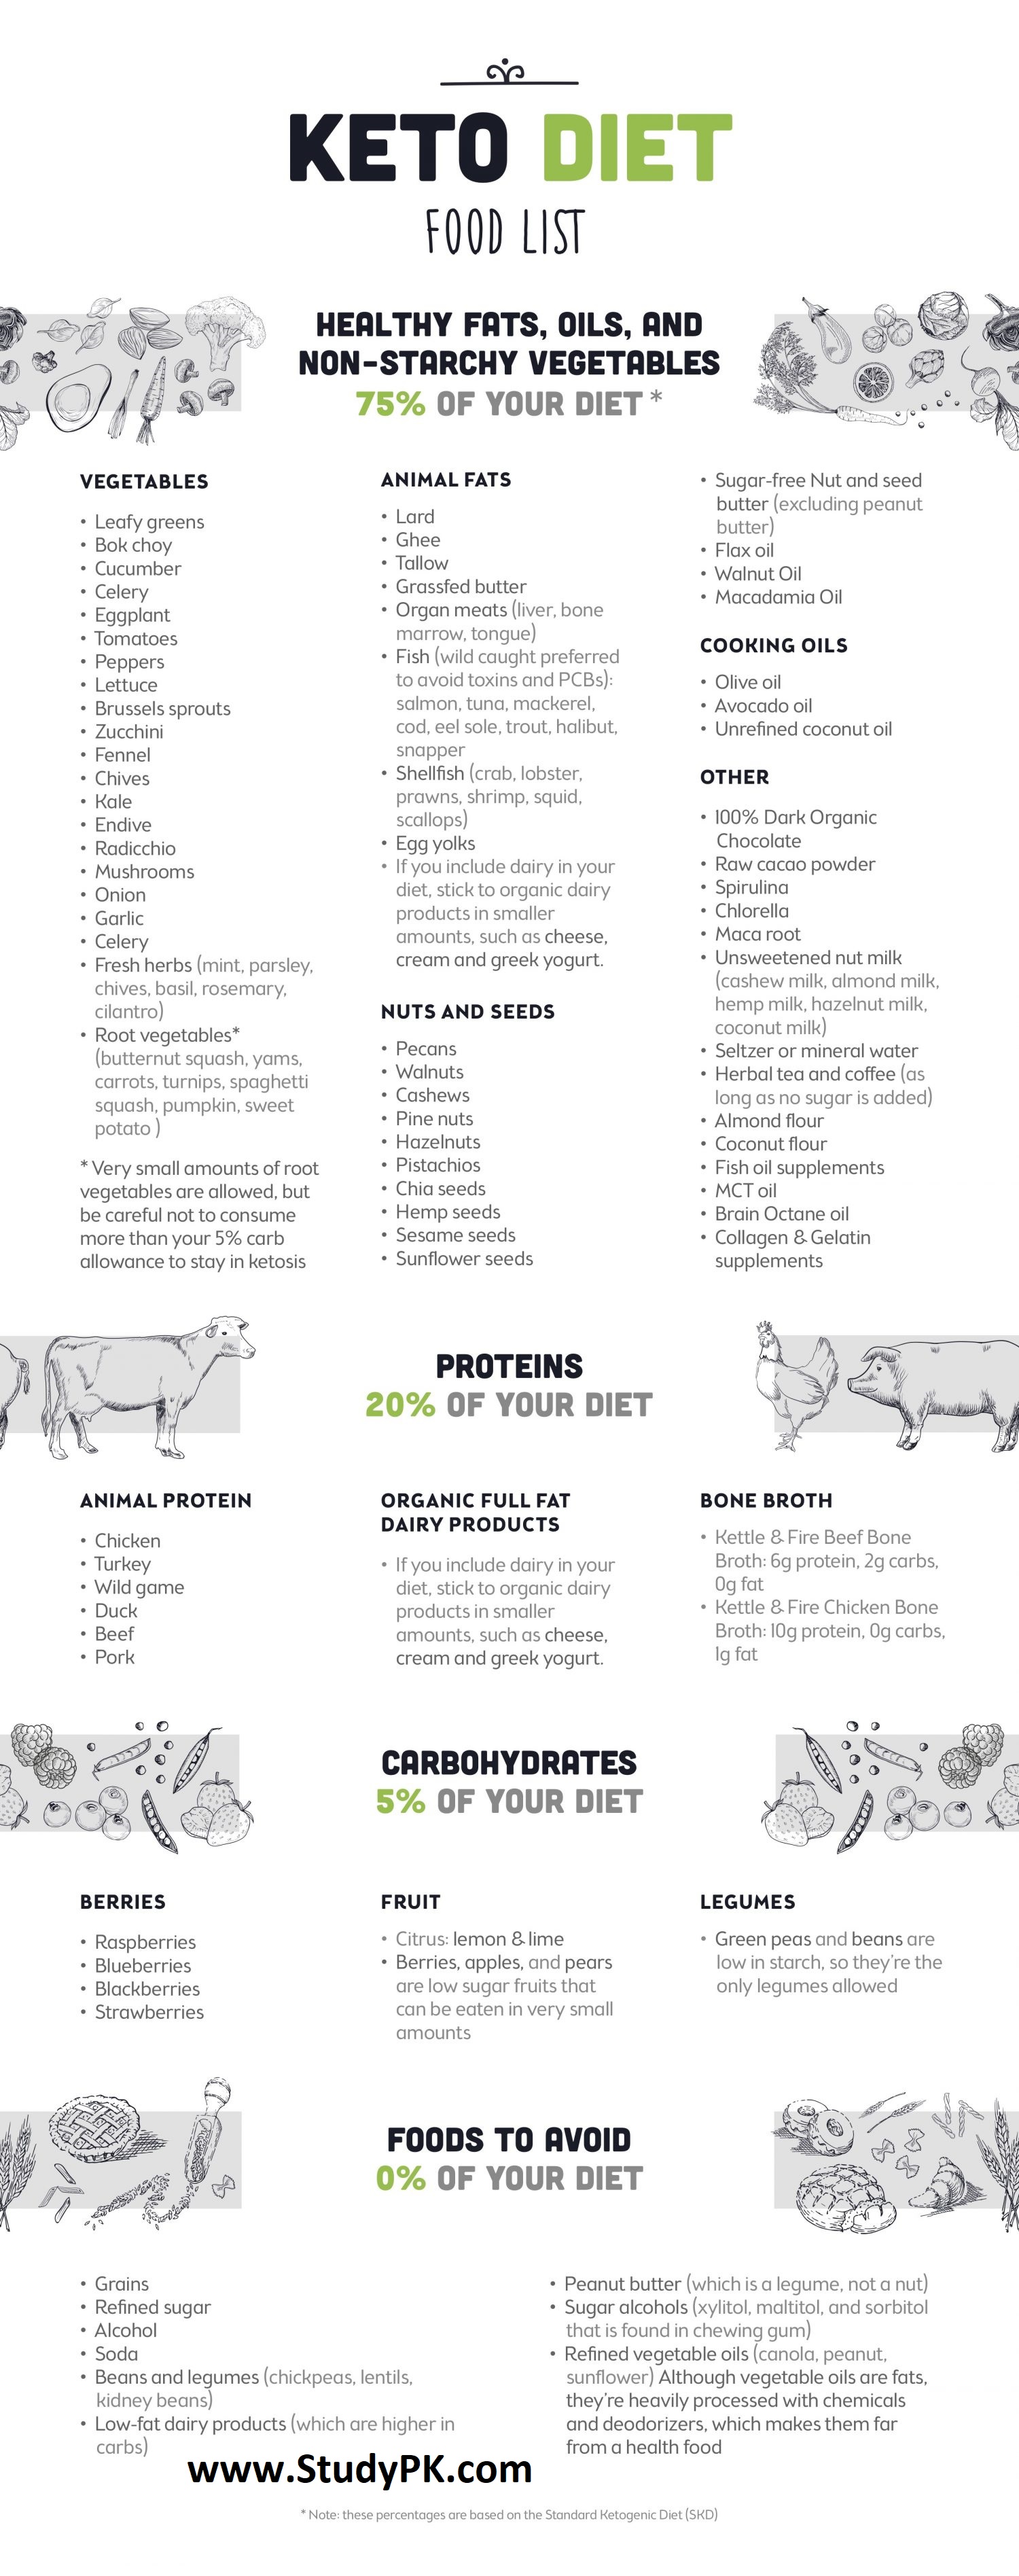 keto-diet-food-list-cheat-sheet-nclex-quiz